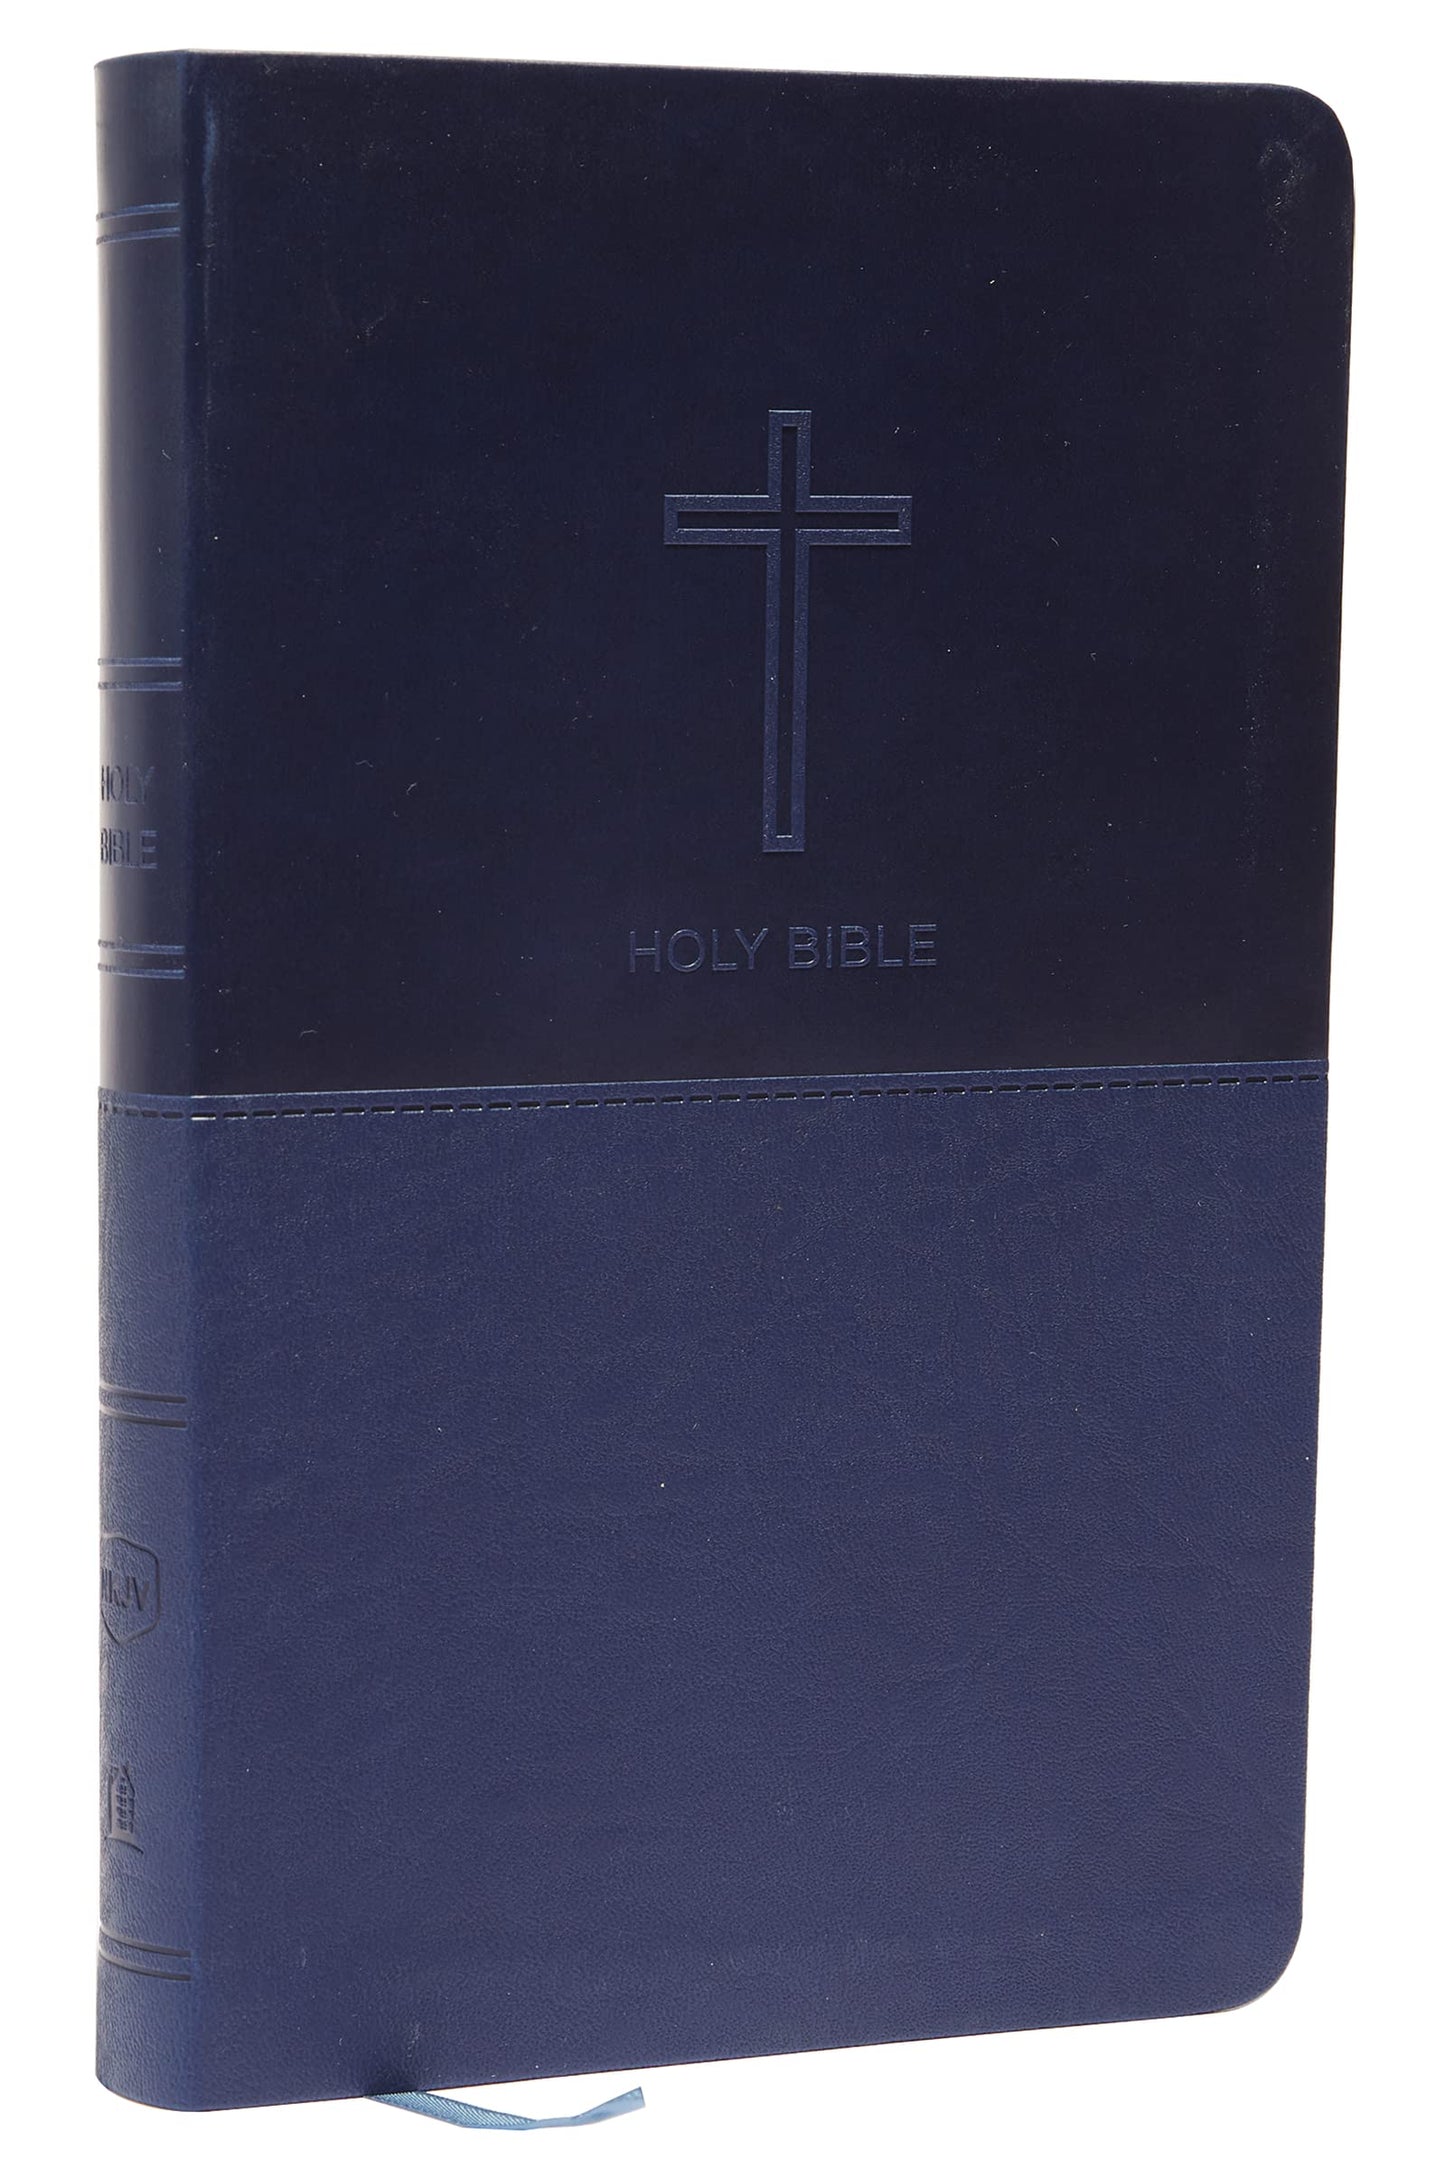 NKJV Value Thinline Bible Comfort Print Blue